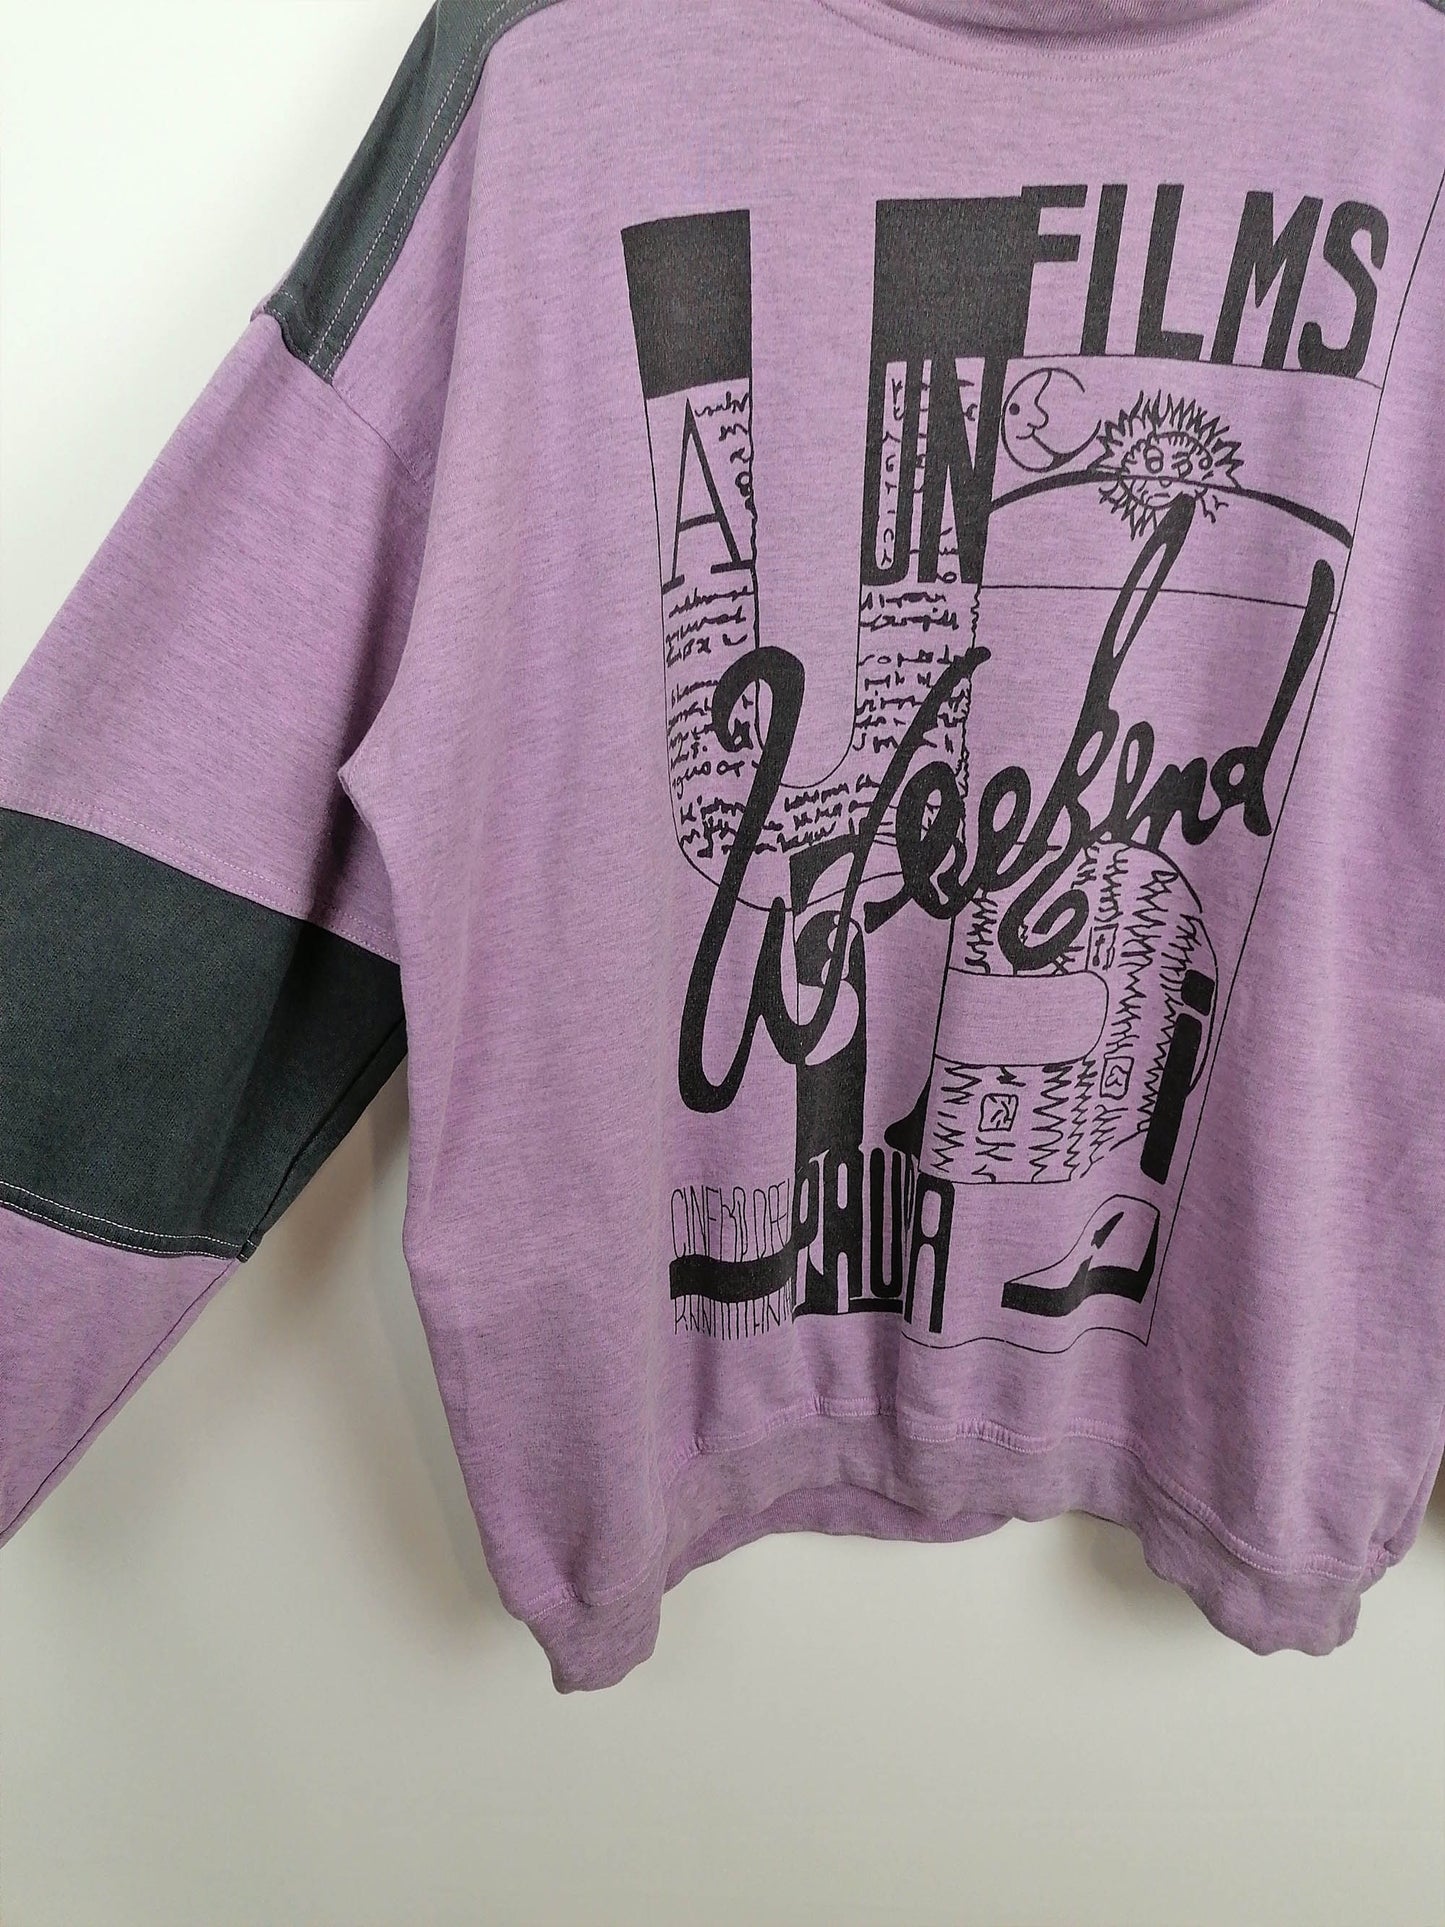 80's Retro Sweatshirt Soft Long Sleeve T-shirt Film Movies Print - size L